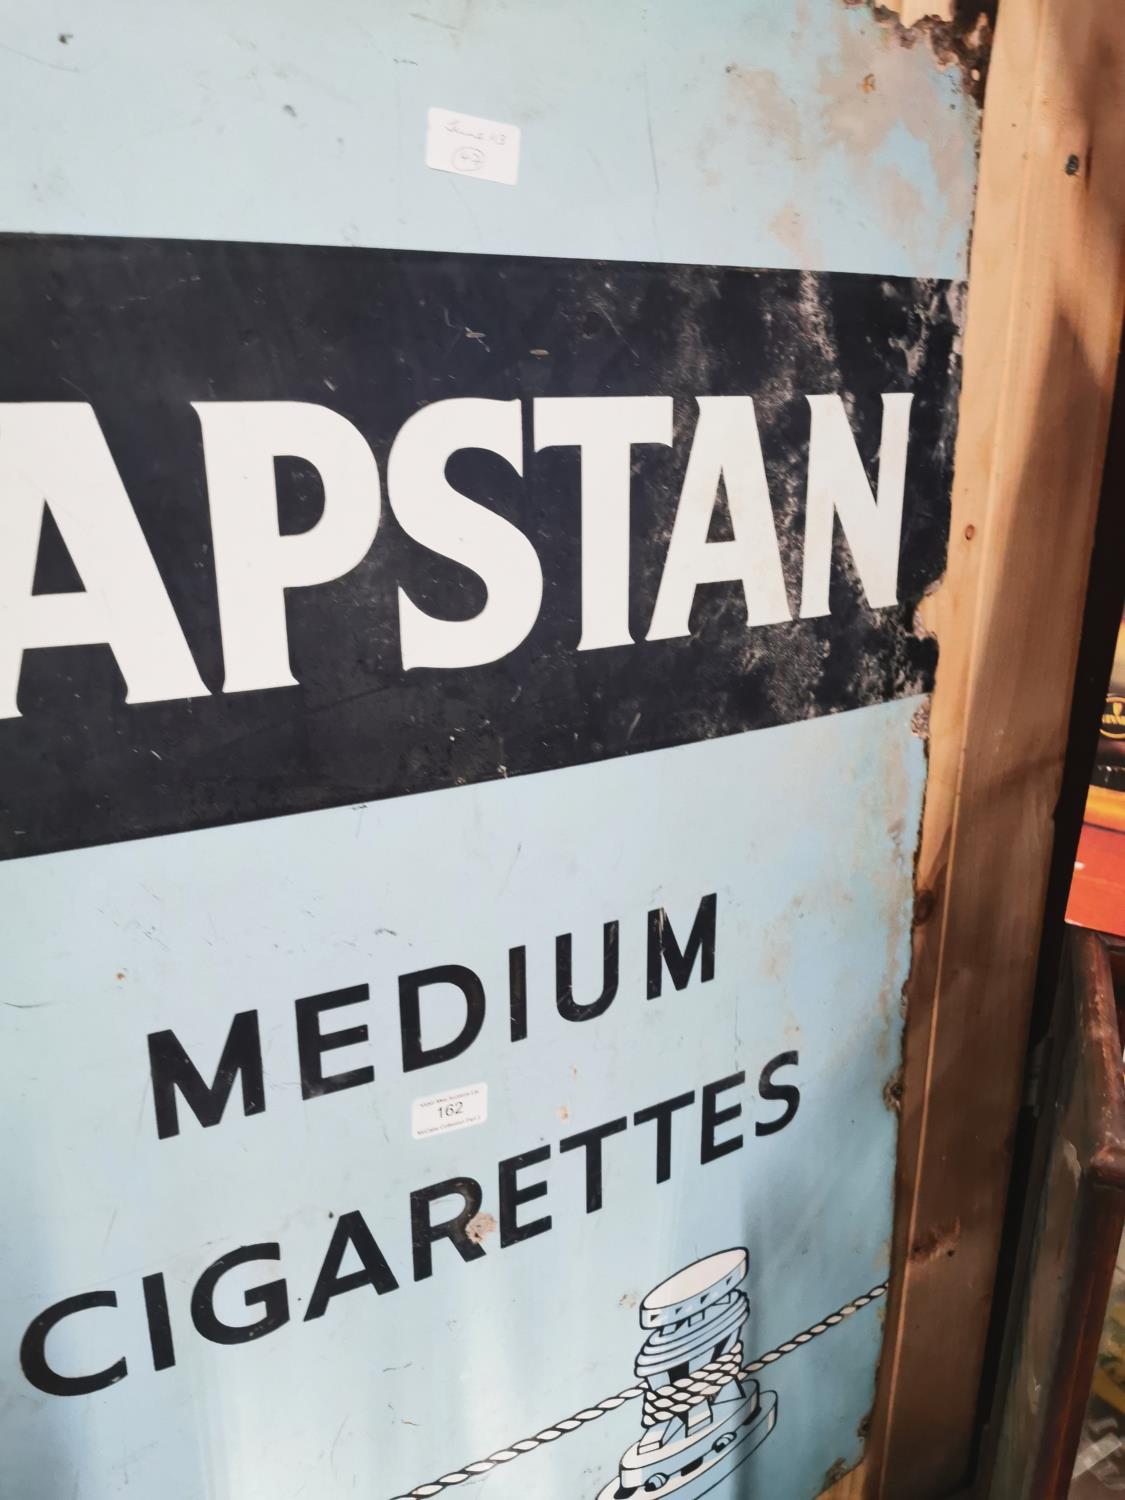 Captan's Medium Cigarettes enamel advertising sign. - Image 3 of 3